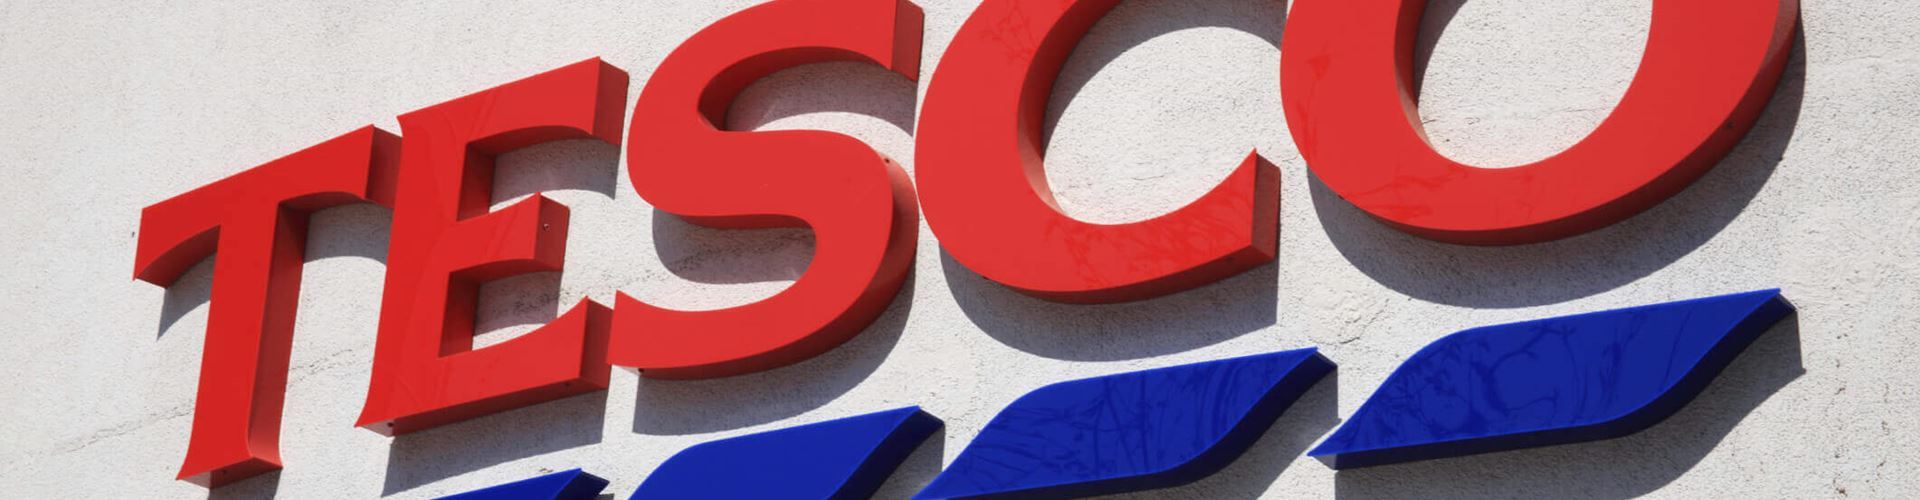 Tesco in £4bn sale of South Korea stores